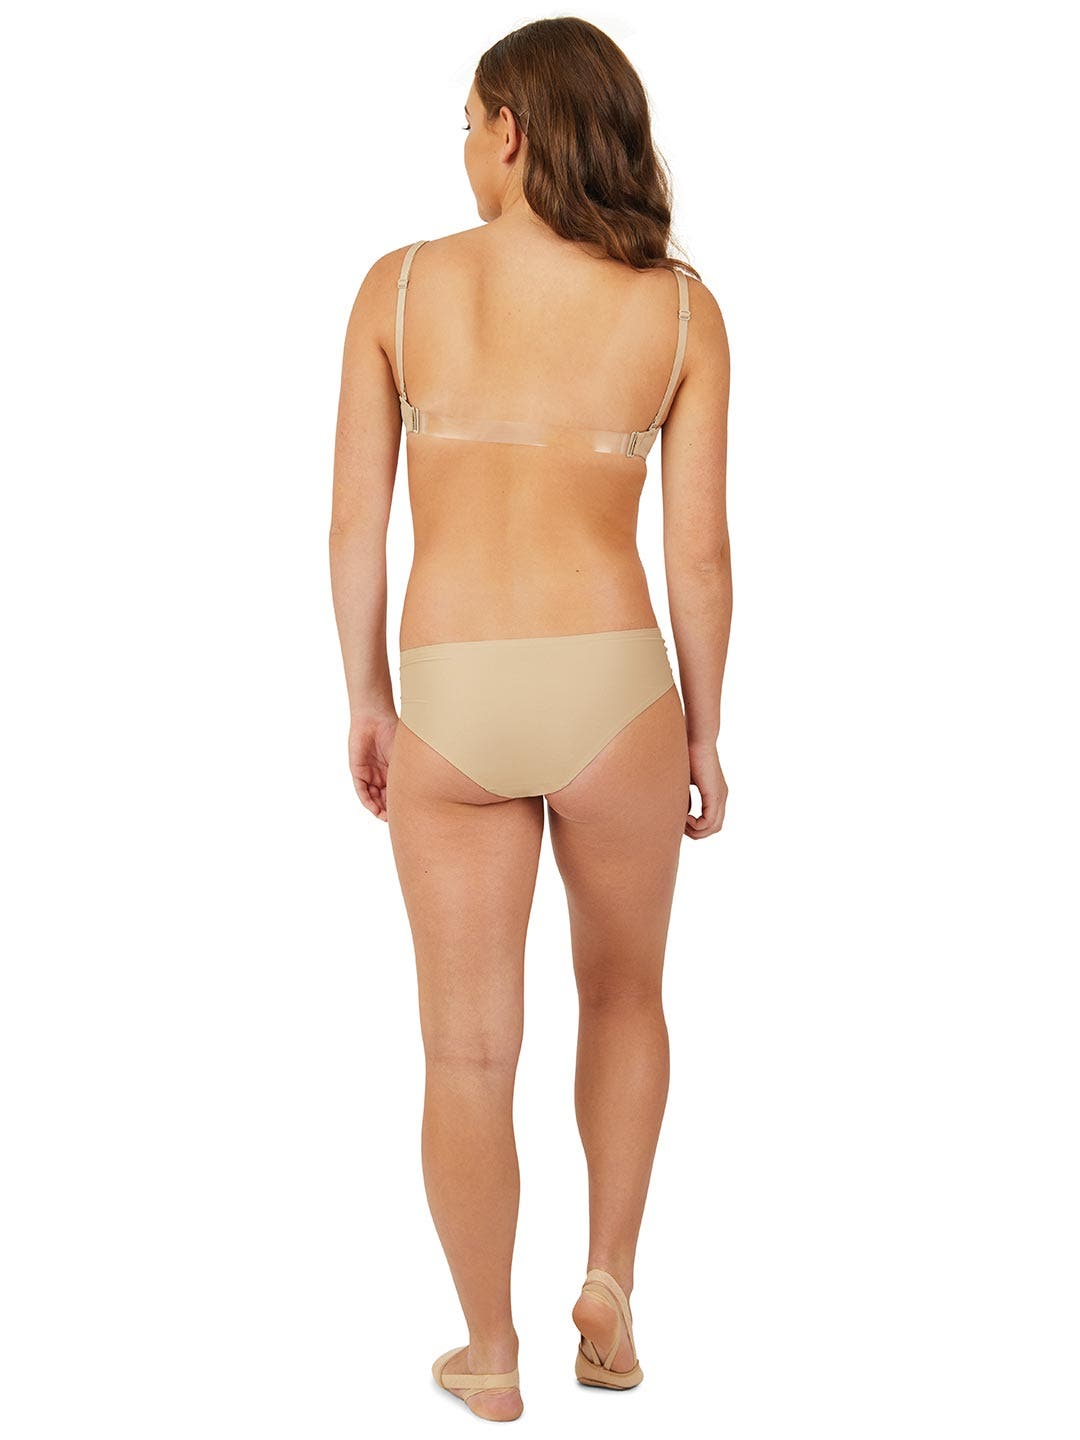 Dance Underwear - Nude Seamless Girls Size 4-6 New